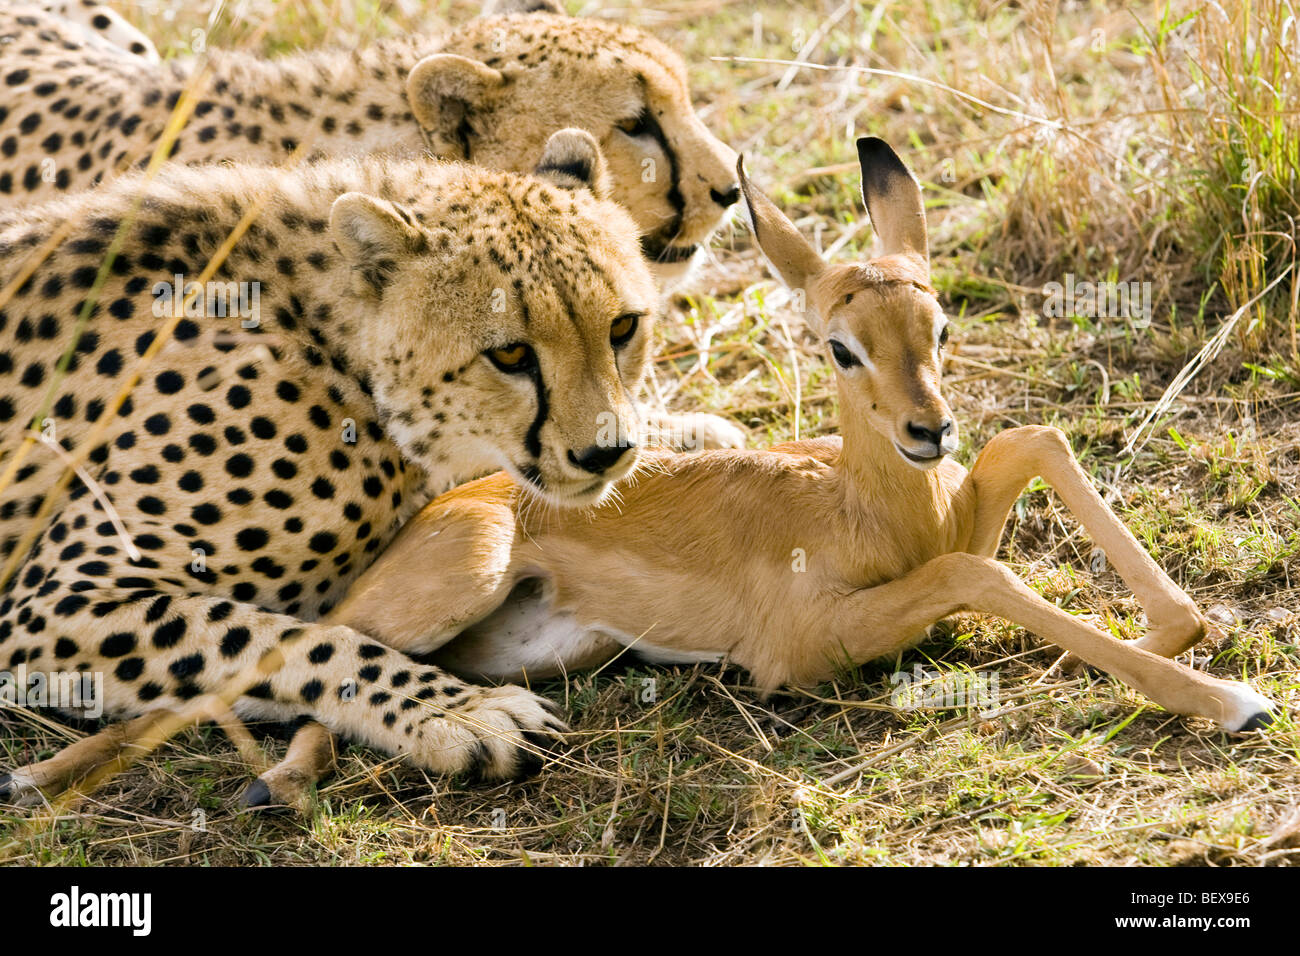 Cheetah with young Impala they've captured - Masai Mara National Reserve, Kenya Stock Photo